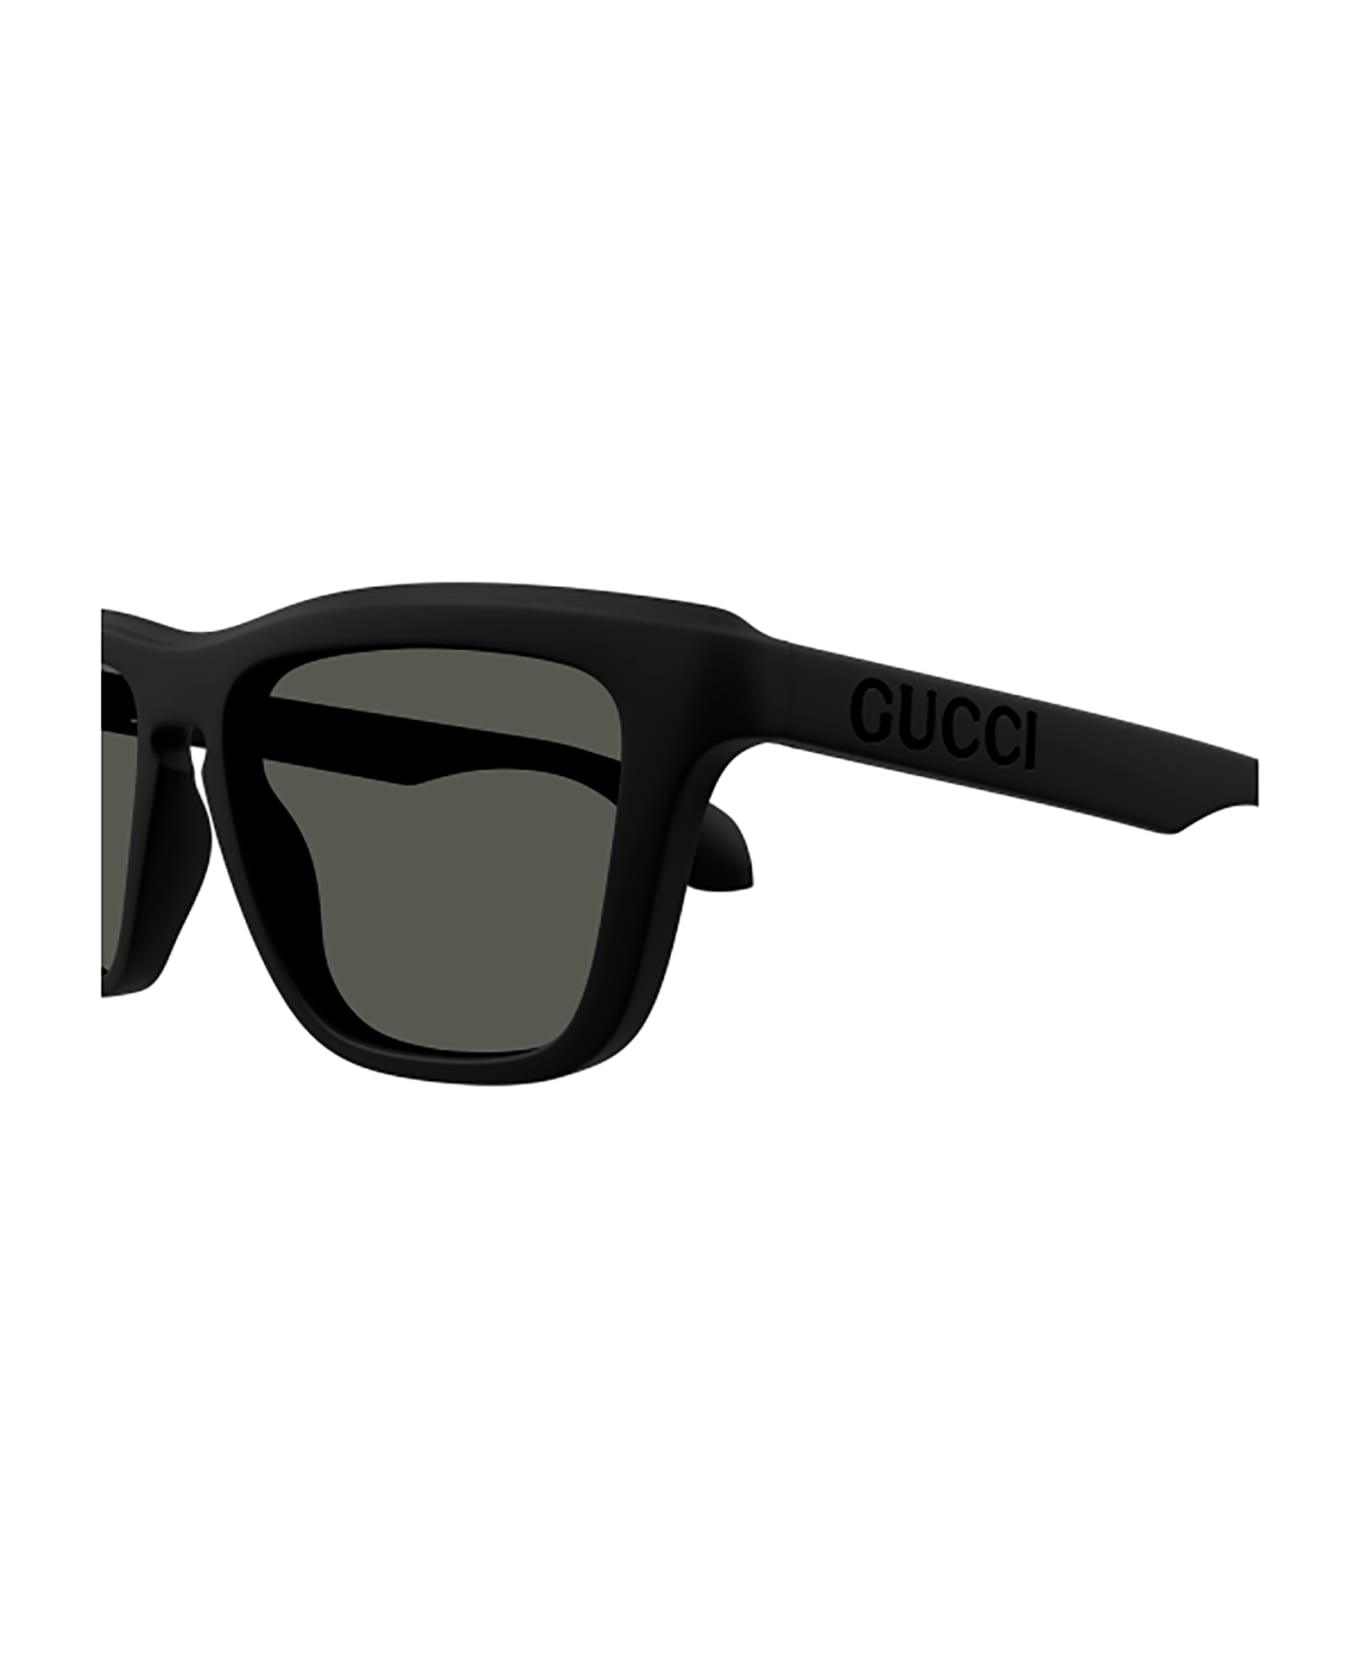 Gucci Eyewear GG1571S Sunglasses - Black Black Grey サングラス